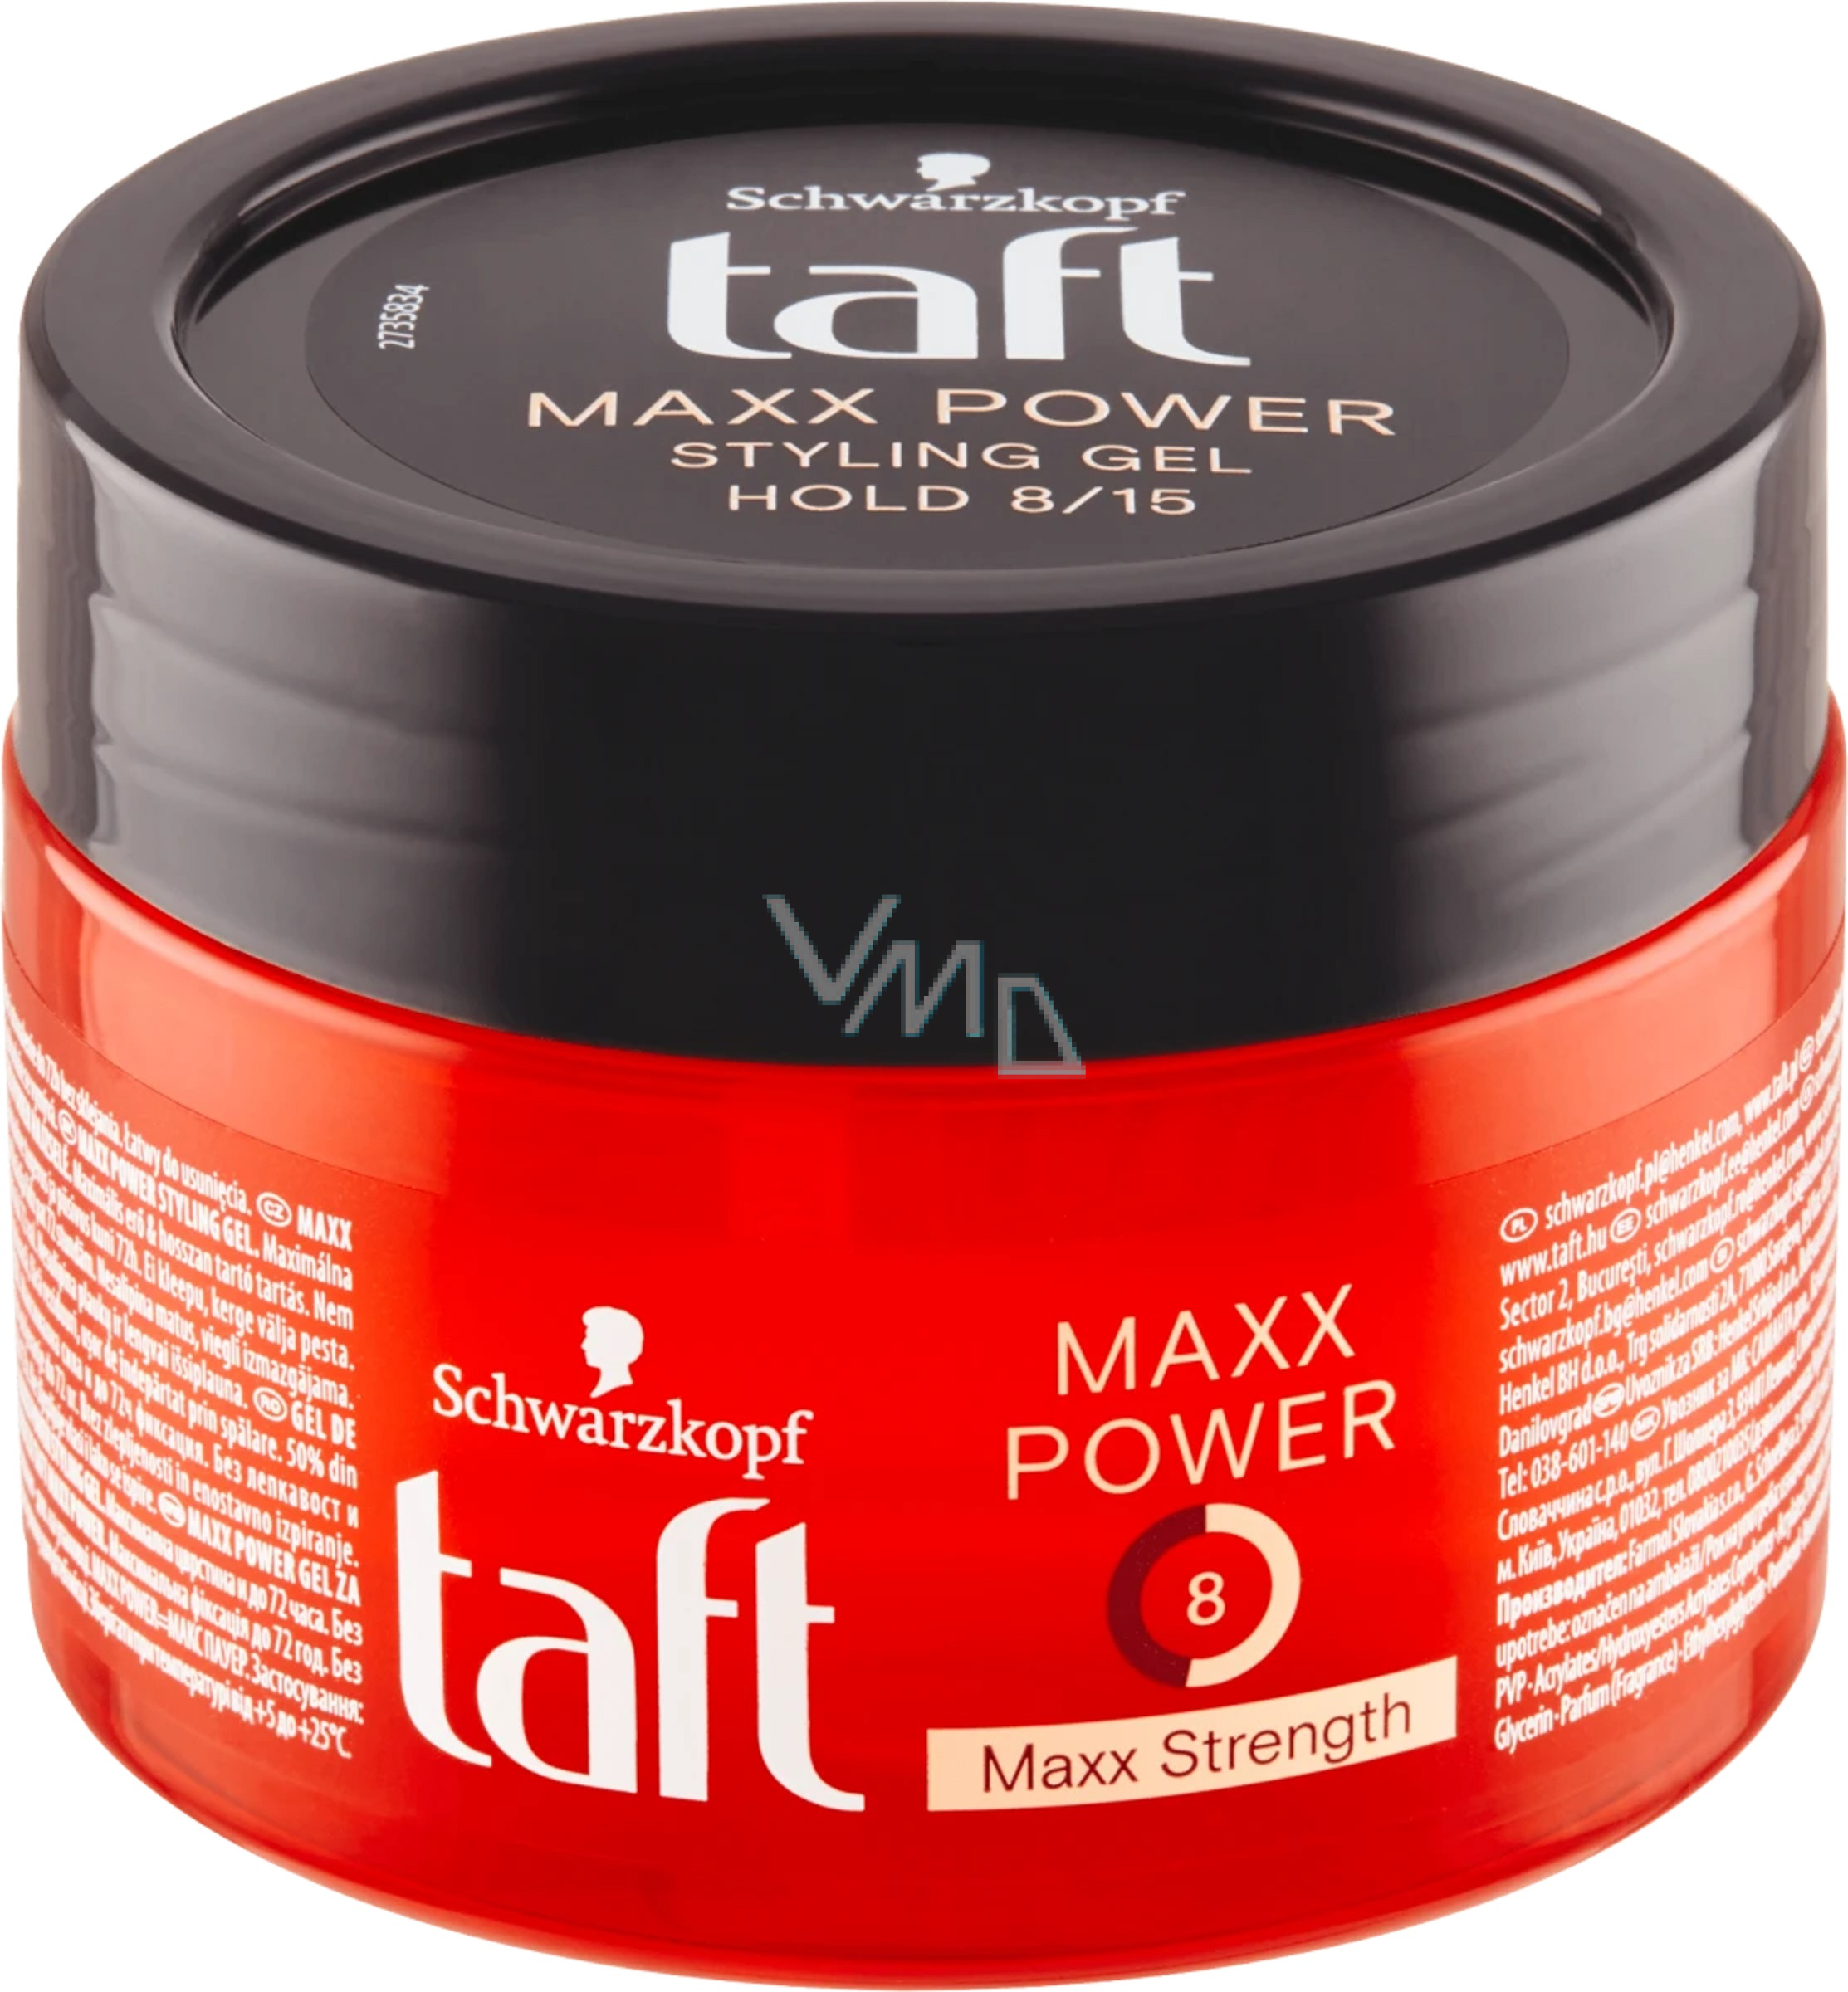 Taft Maxx Power styling gel 250 ml - VMD parfumerie - drogerie